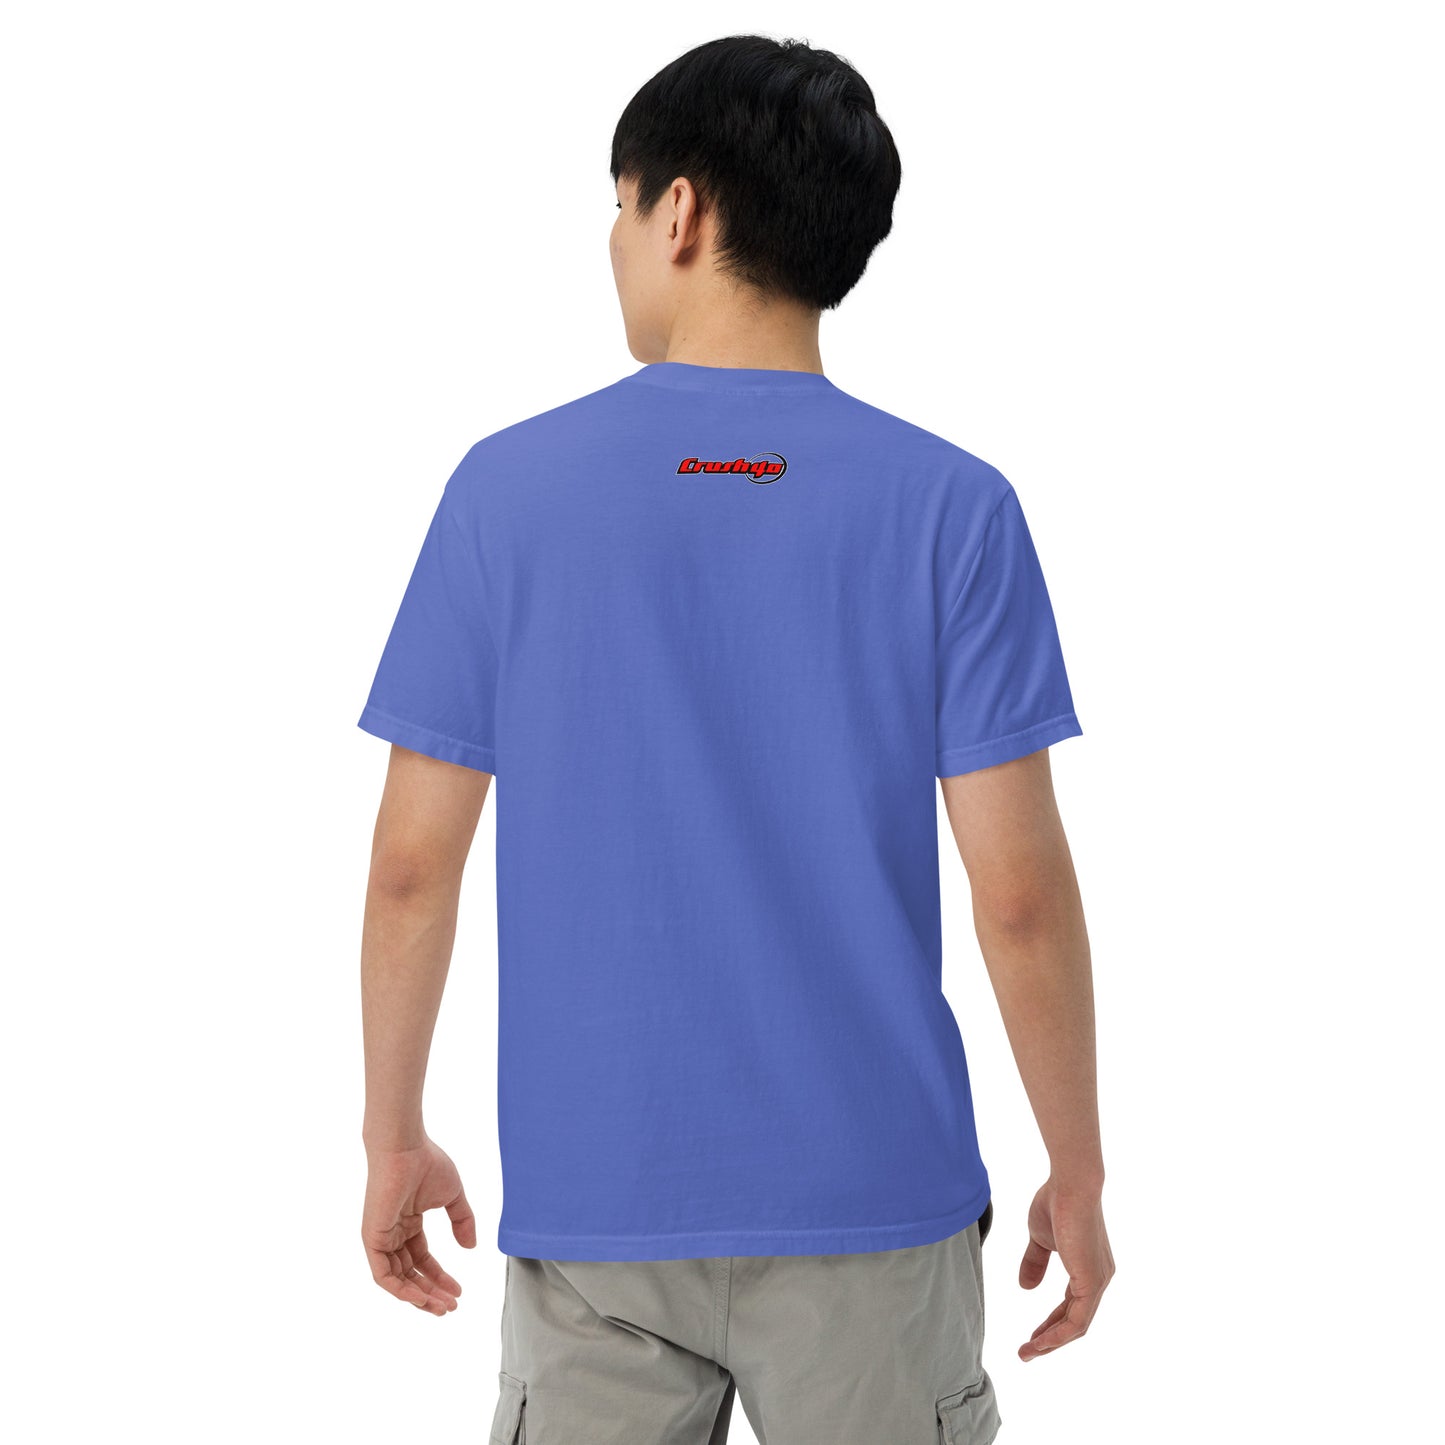 Crush40 Men’s Garment-dyed Heavyweight T-shirt